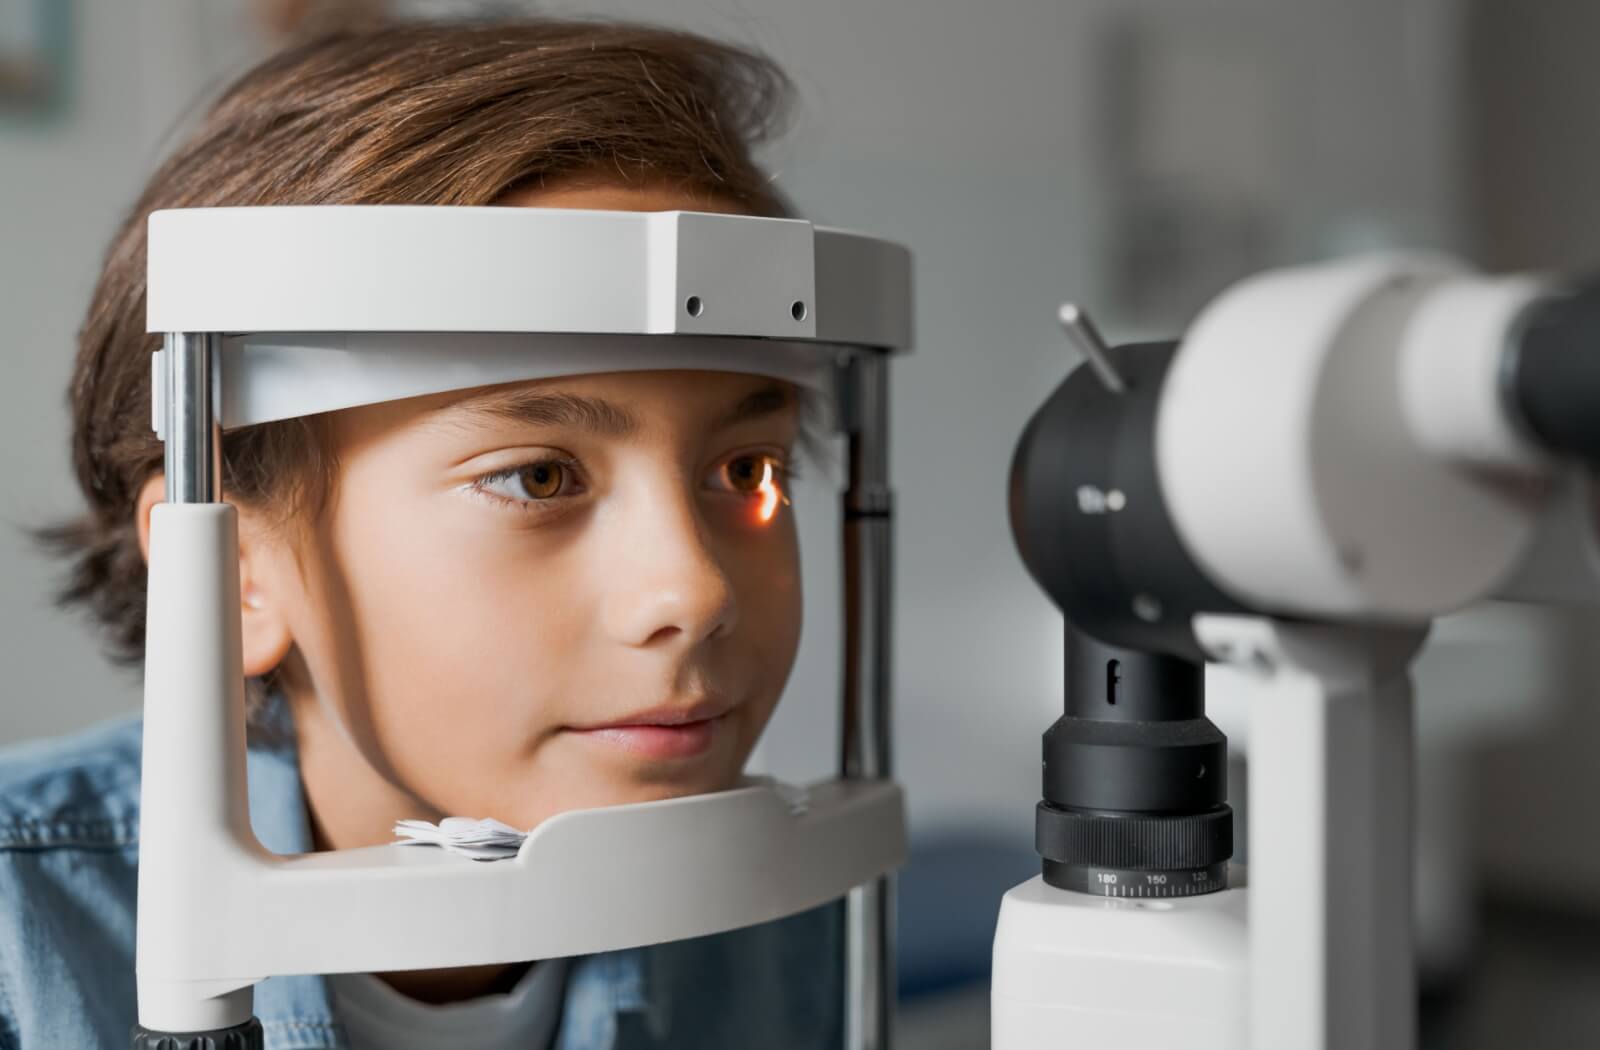 A boy undergoes a slit lamp exam during an eye exam.